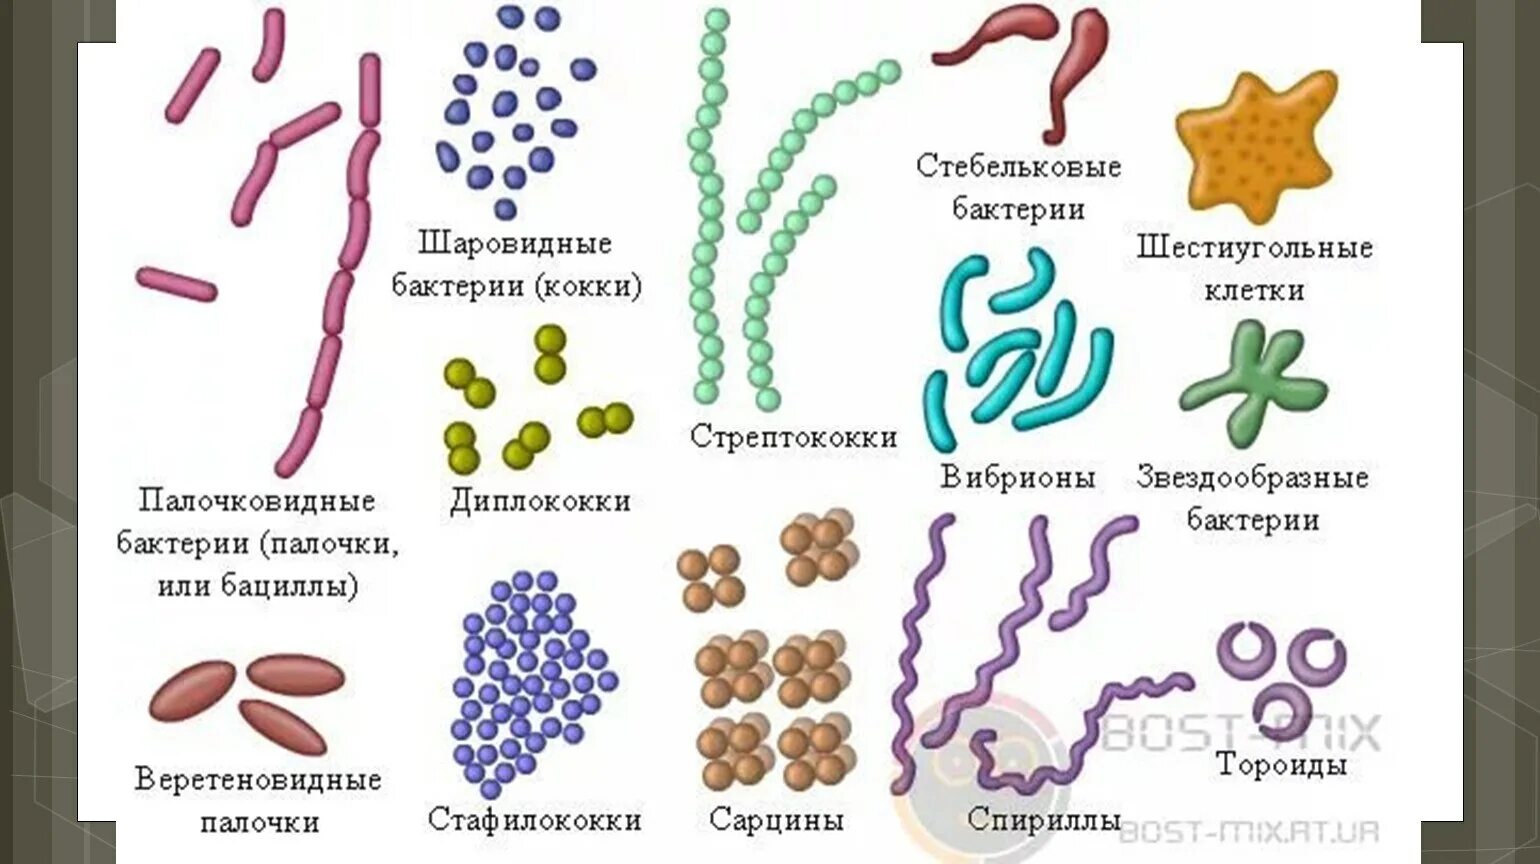 Формы бактерий 9 класс биология. Бактерии названия 2 класс бациллы. Формы бактериальных клеток кокки. Формы бактерий (кокковидные, палочковидные, извитые)..